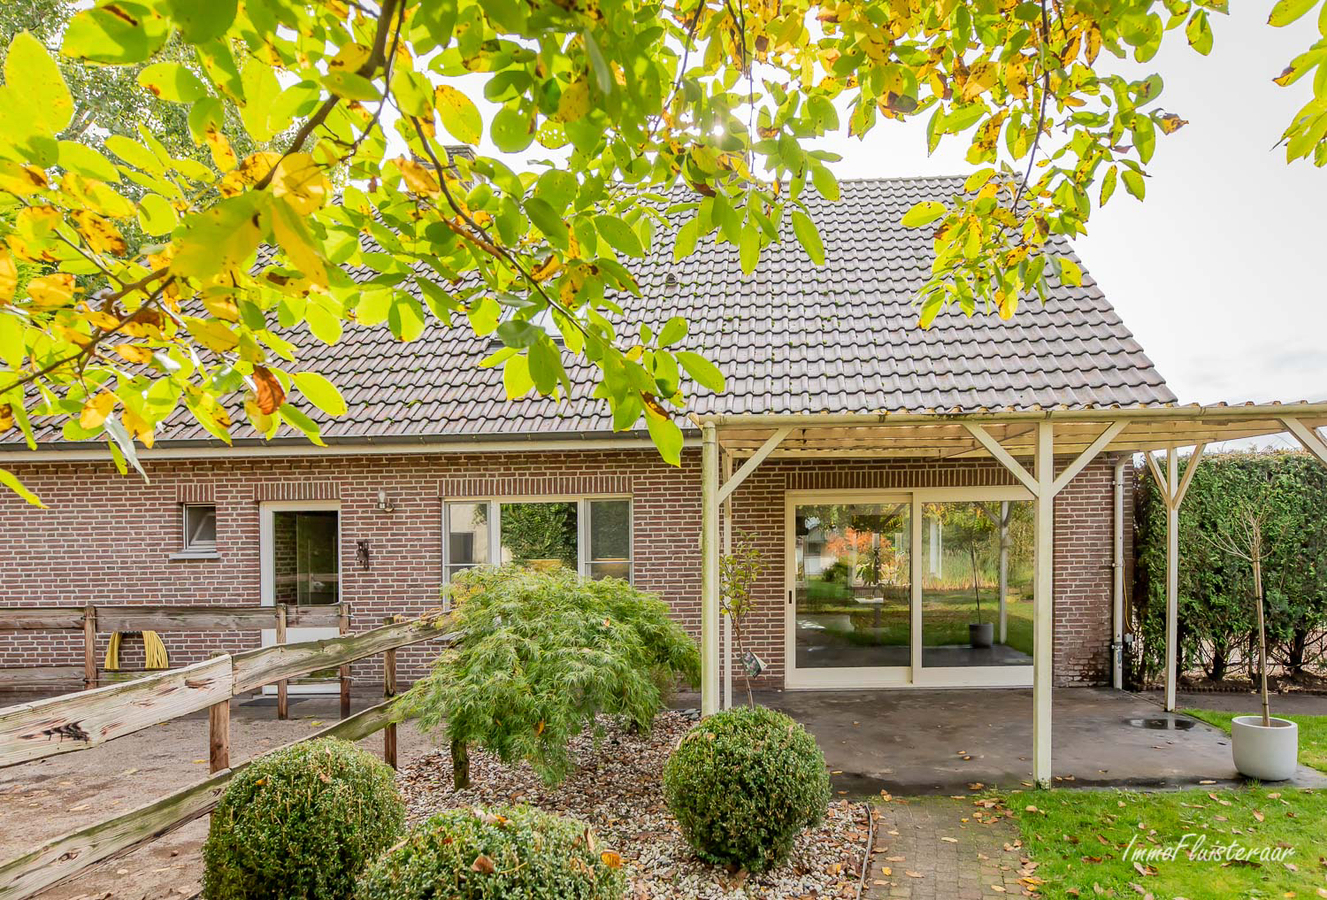 Property sold in Weelde